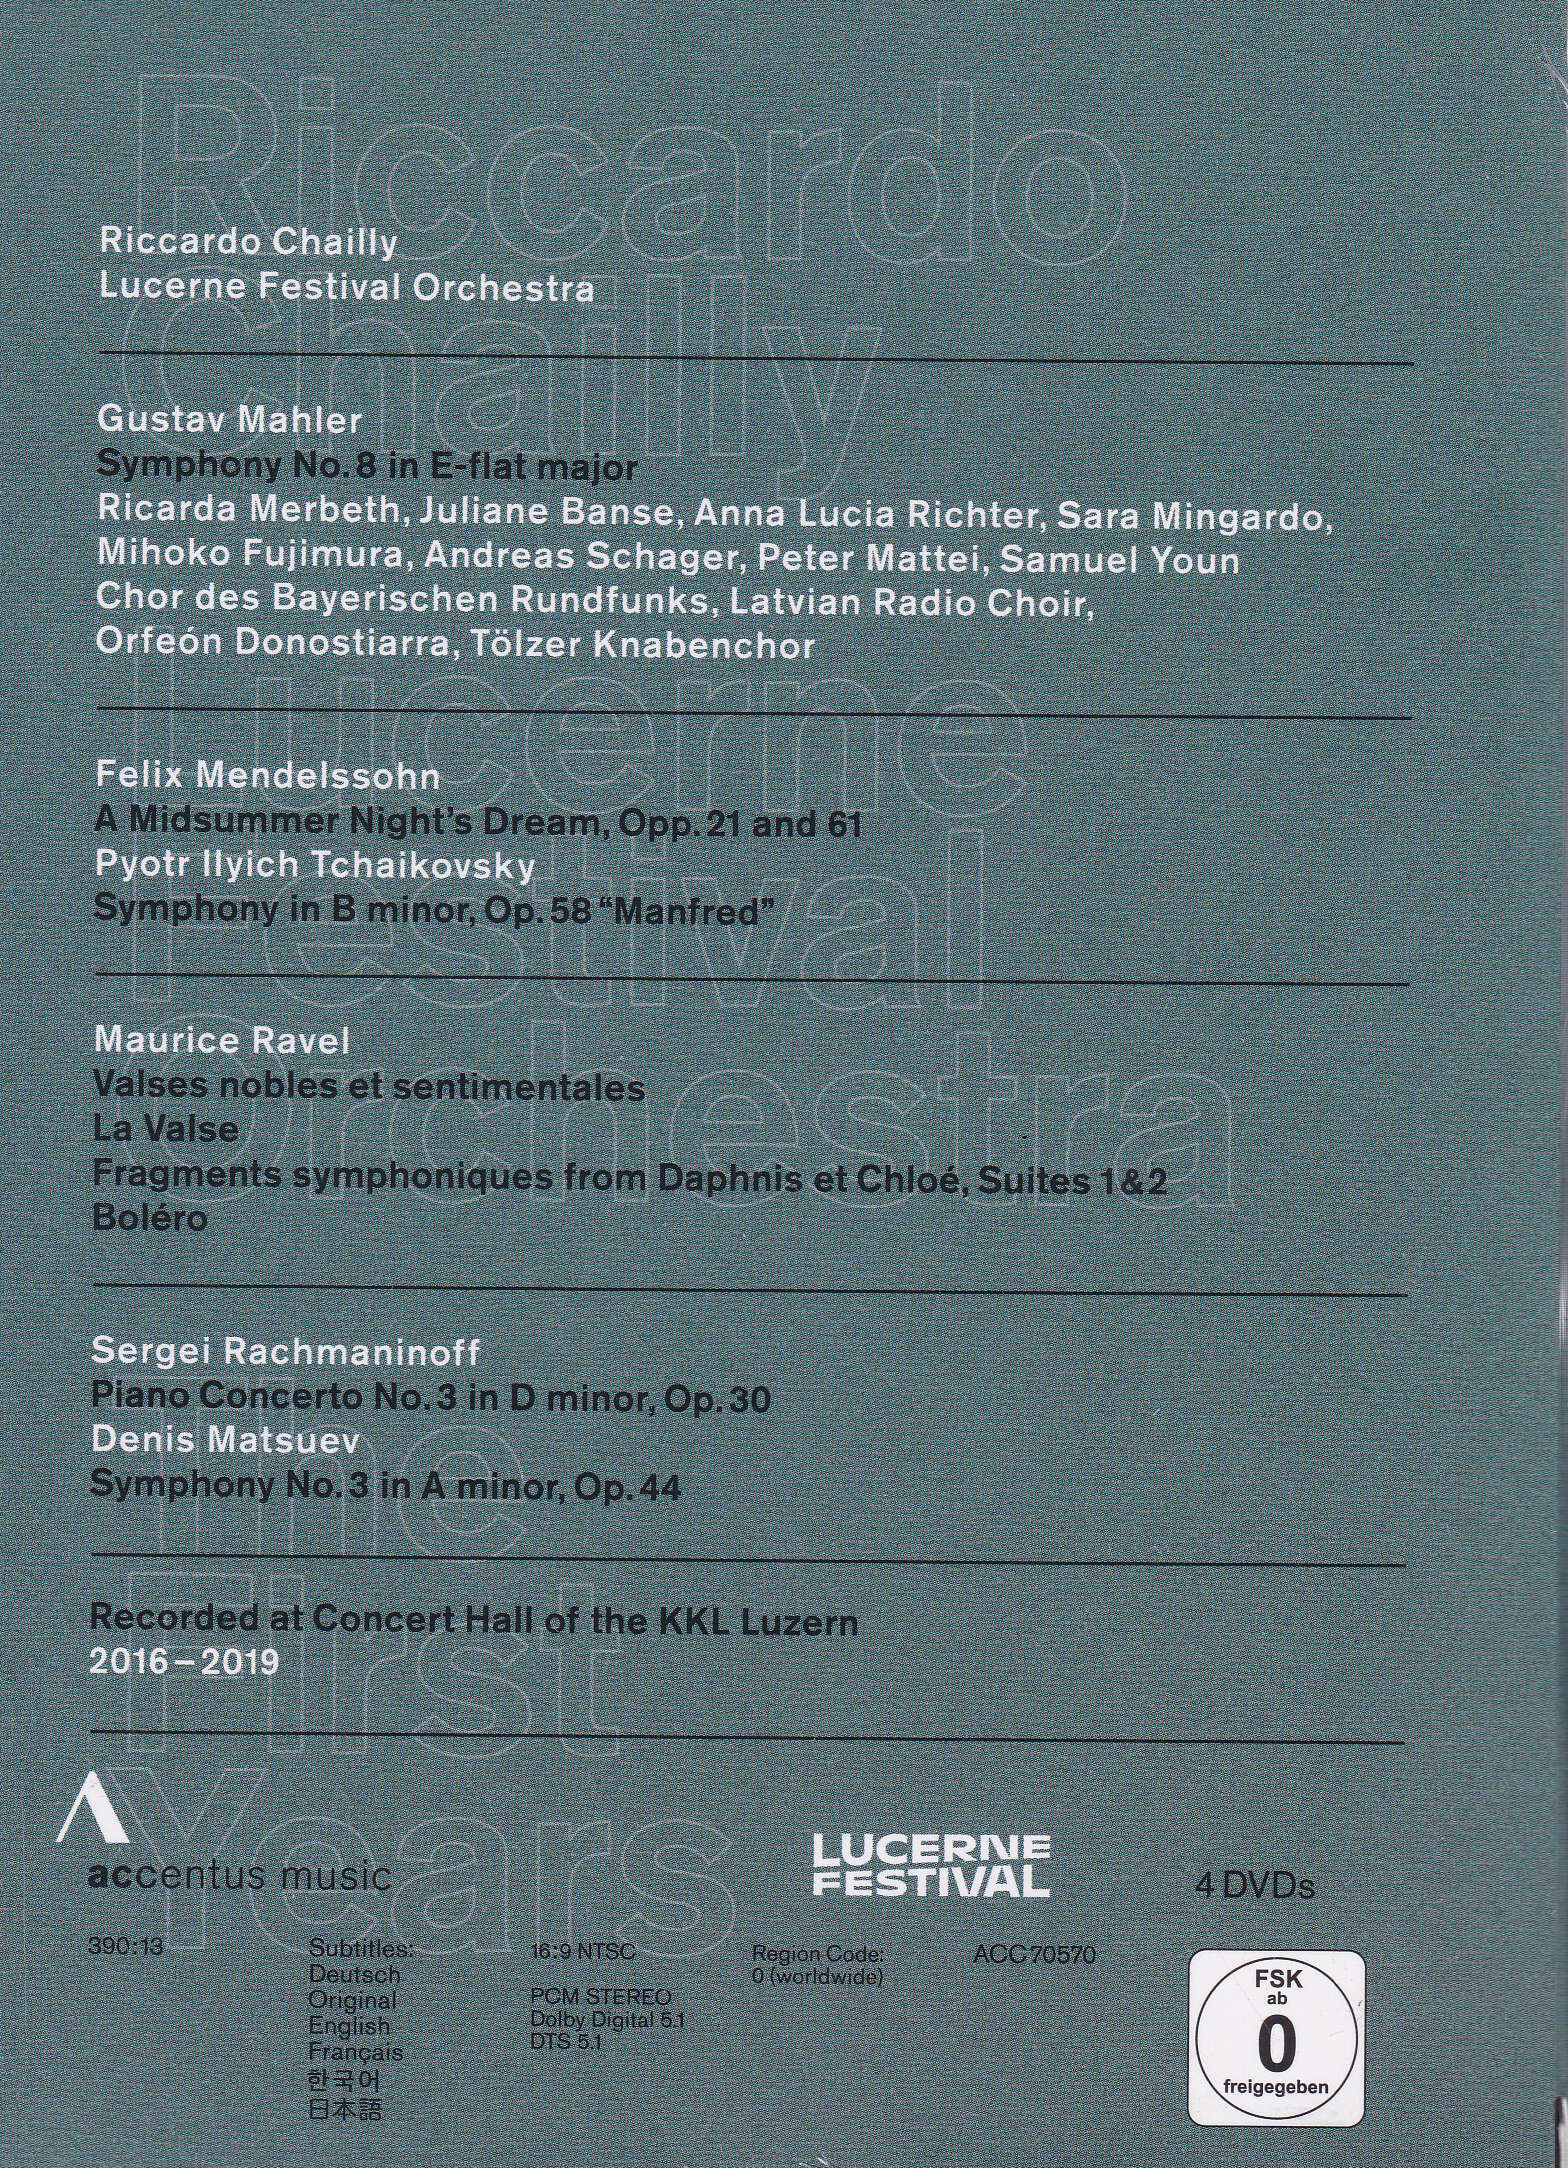 Riccardo Chailly 리카르도 샤이 - 루체른 페스티벌 오케스트라 (Riccardo Chailly, Lucerne Festival Orchestra - The First Years)